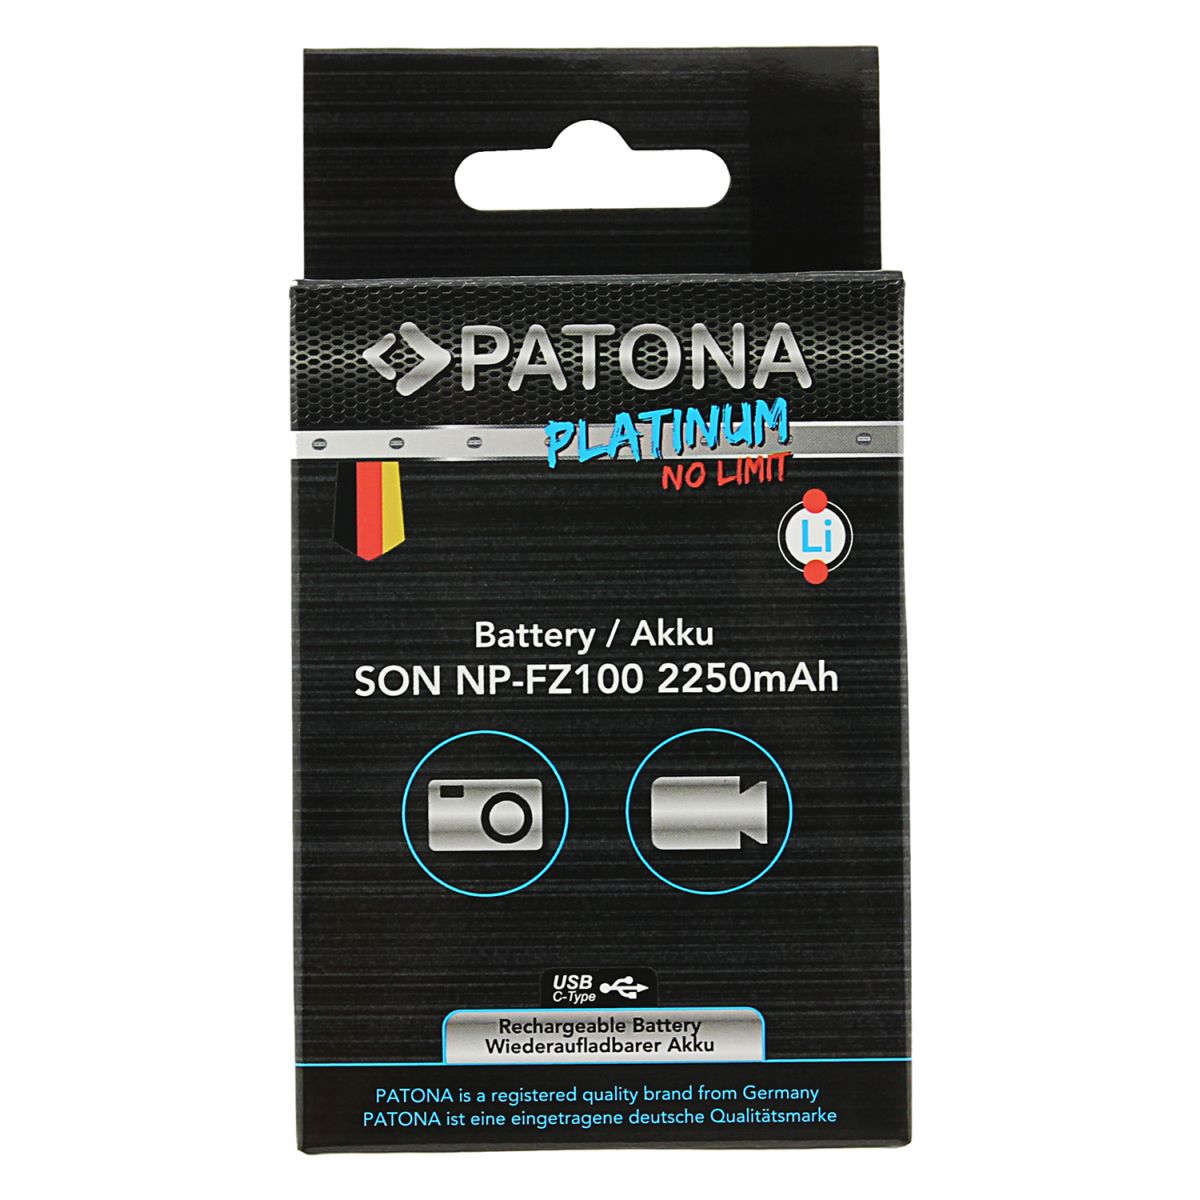 Patona Platinum Akku mit USB-C Input für Sony NP-FZ100